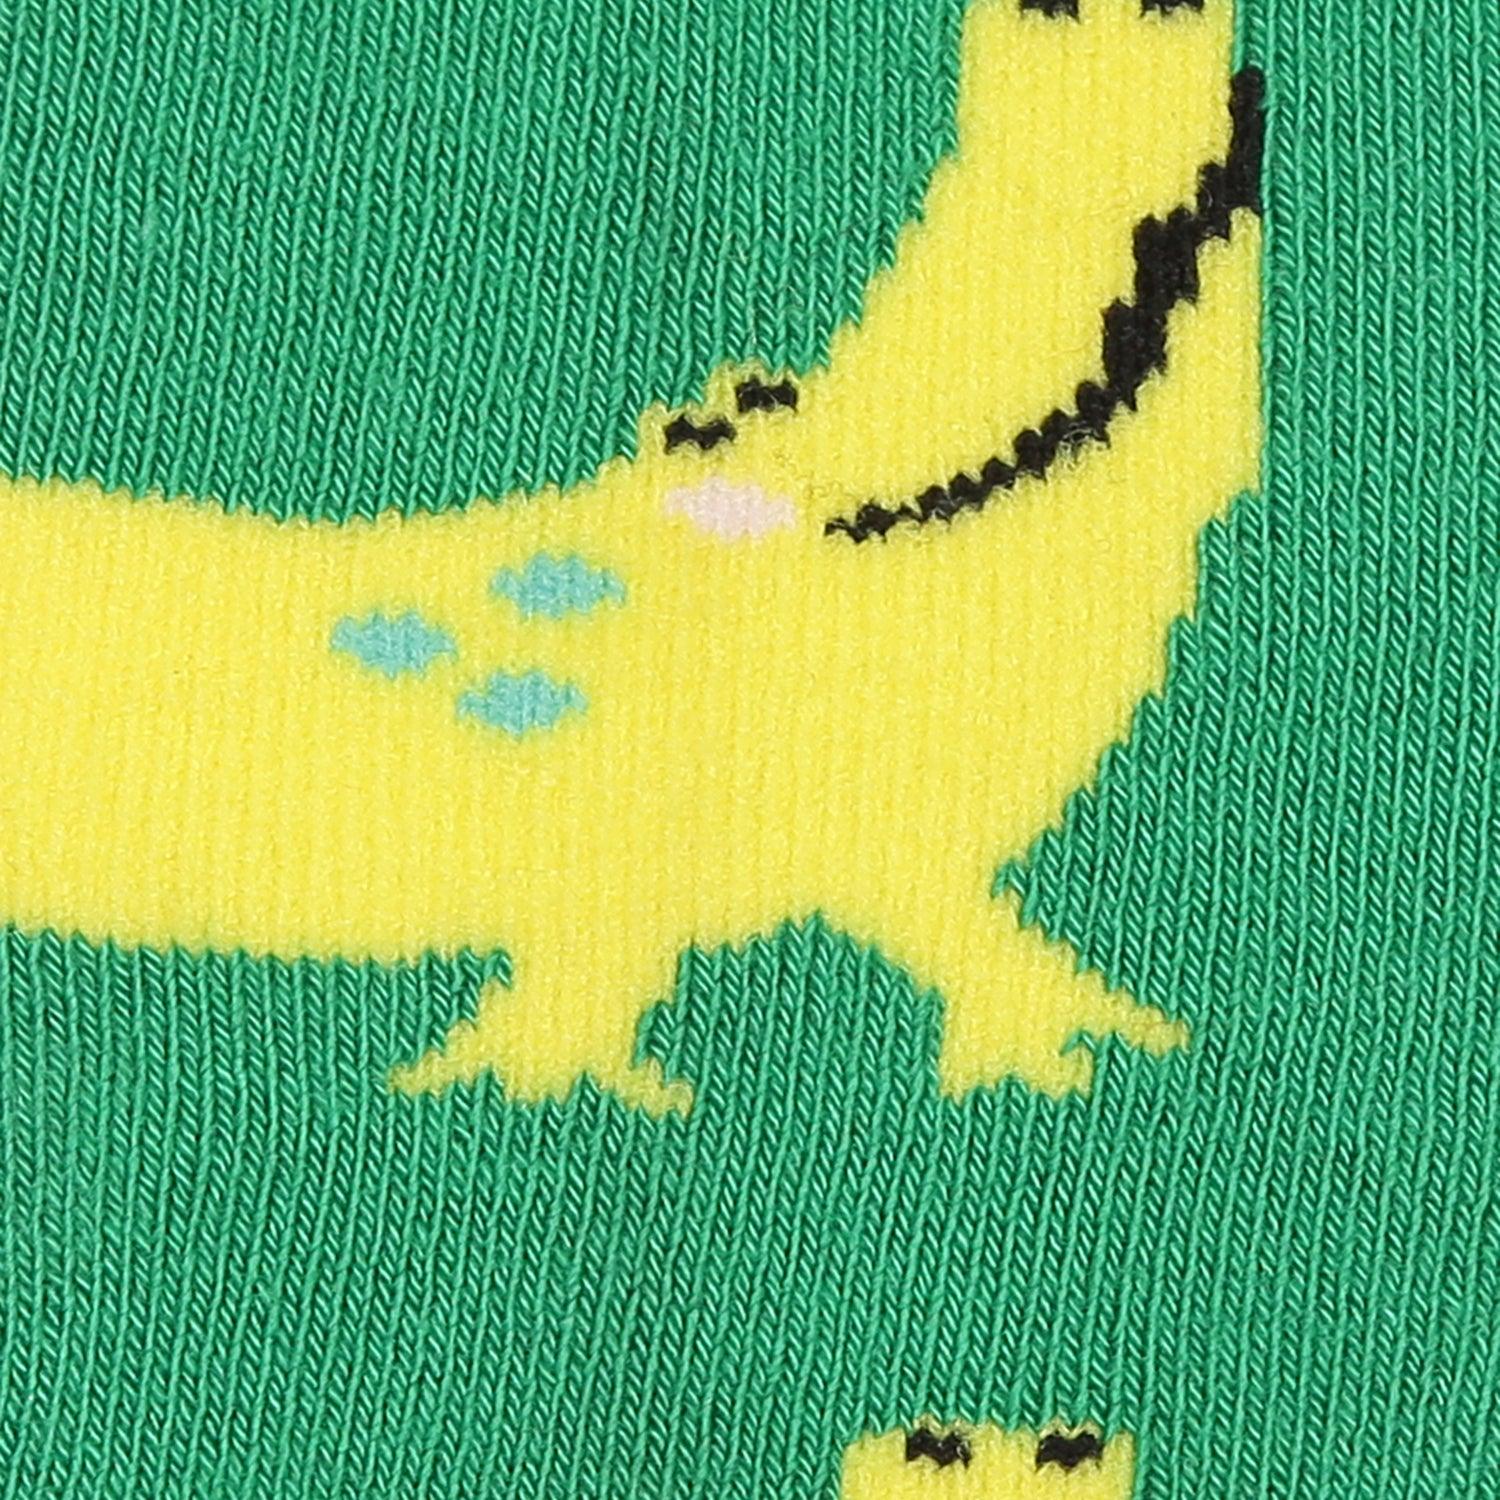 2-4 Years Crocodile Kids Socks - soxytoes